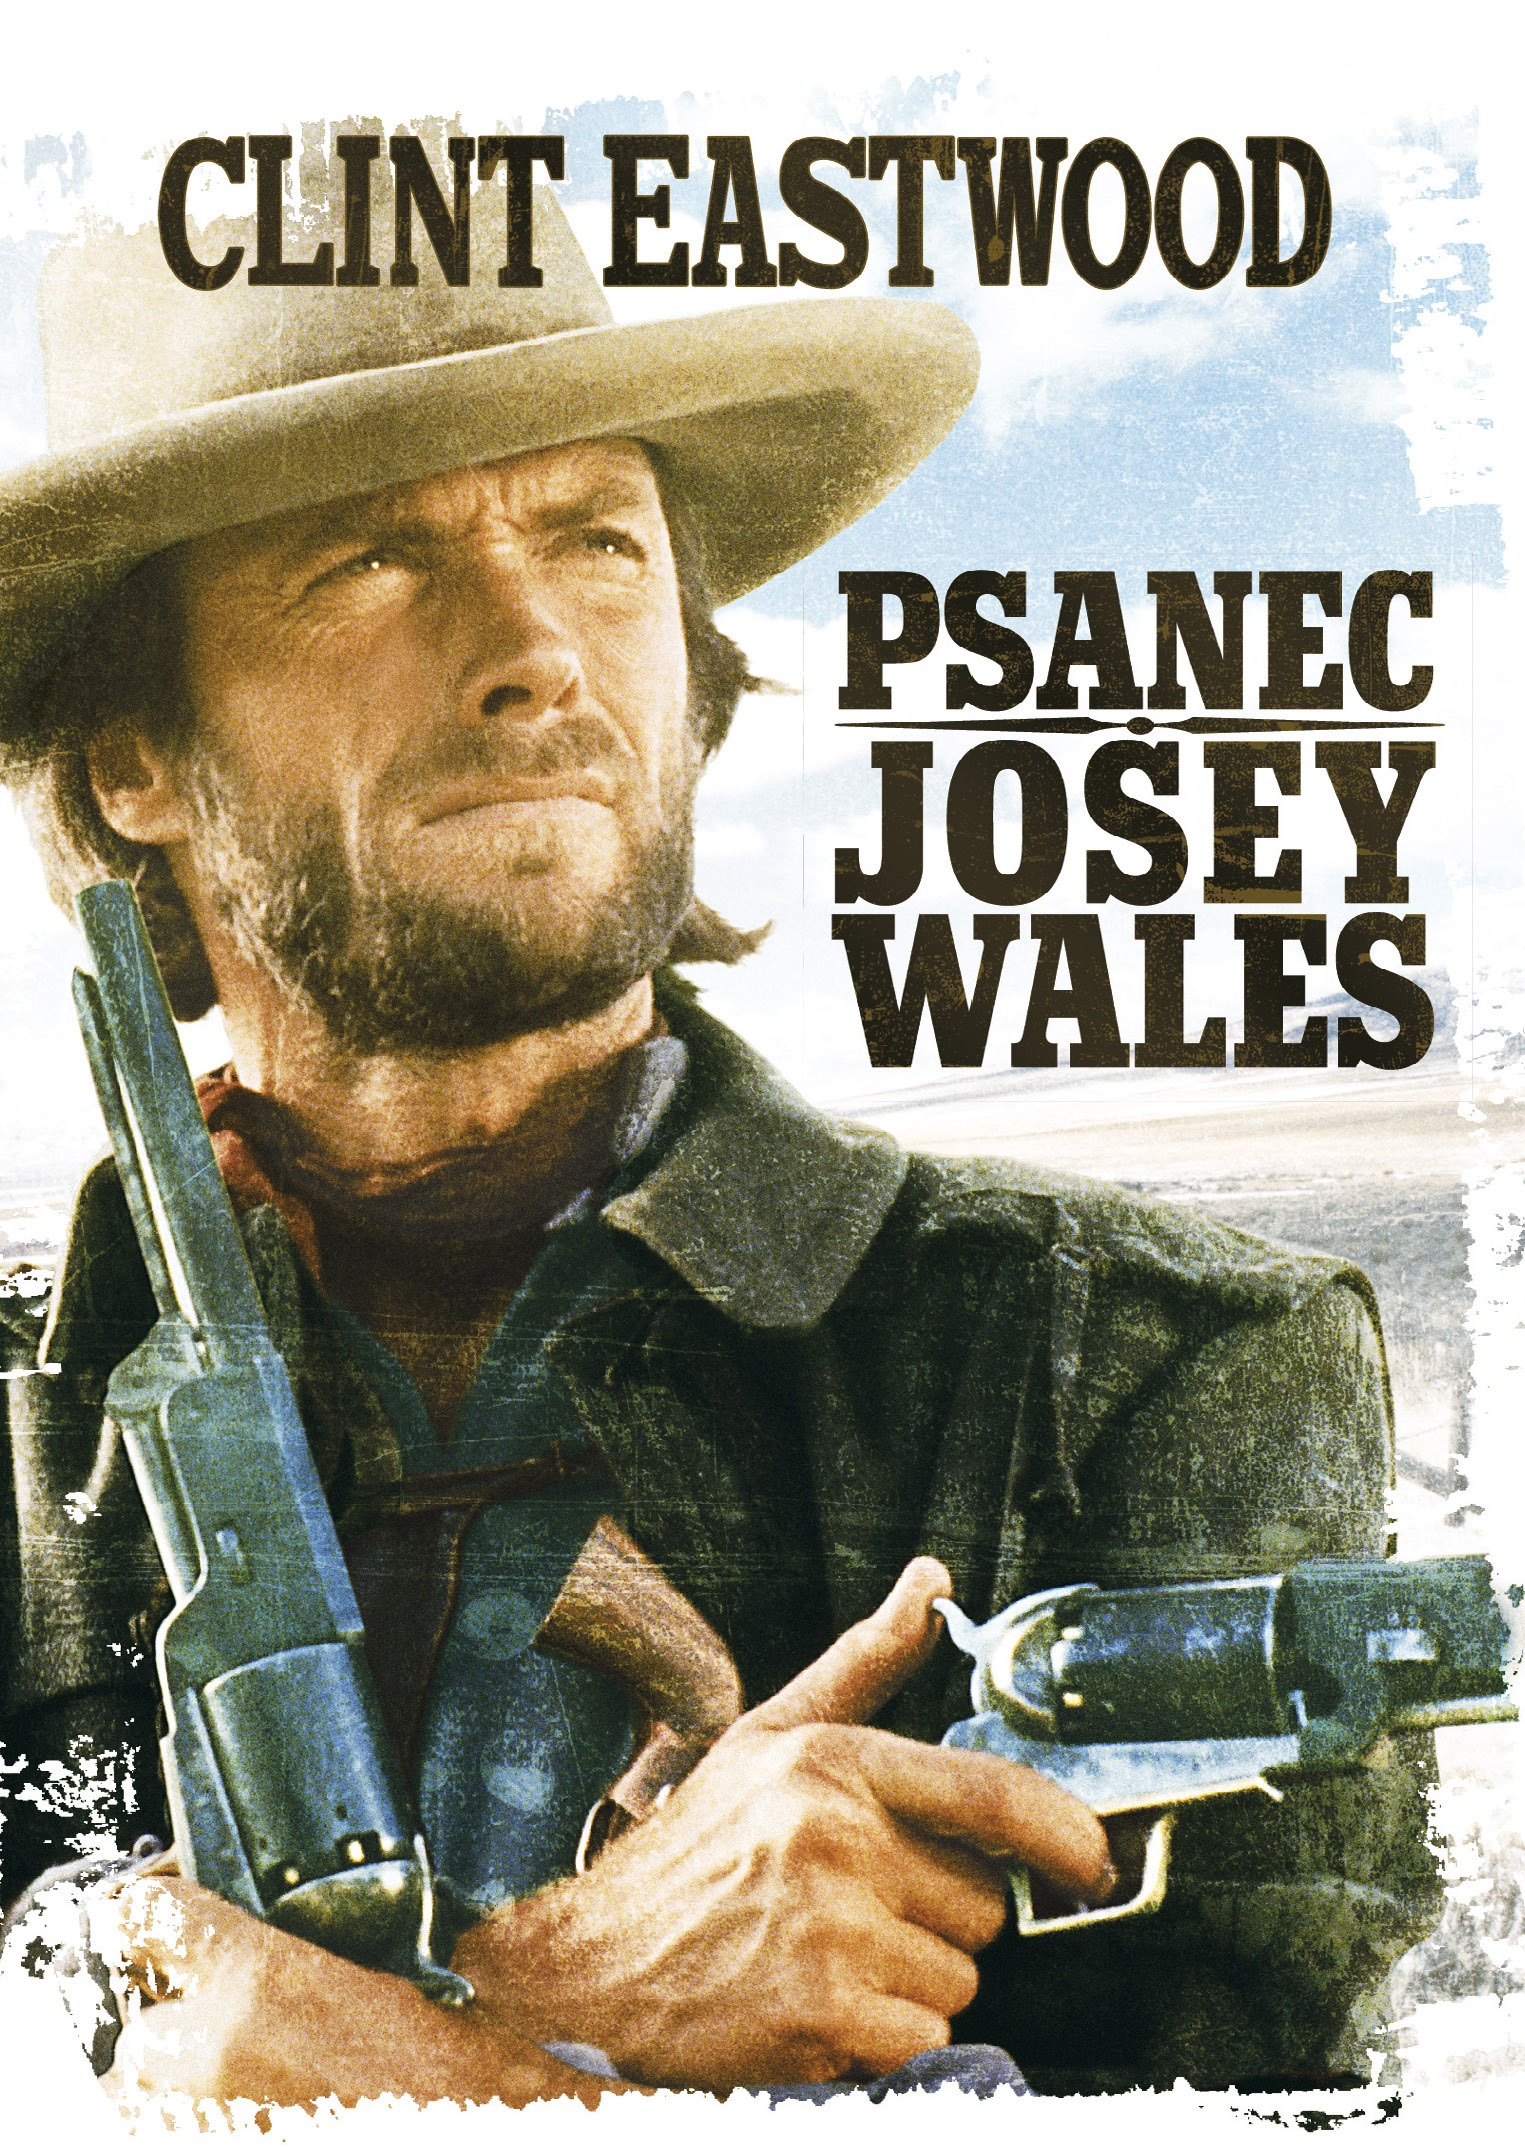 Stiahni si Filmy CZ/SK dabing Psanec Josey Wales / The Outlaw Josey Wales (1976)(CZ) = CSFD 76%